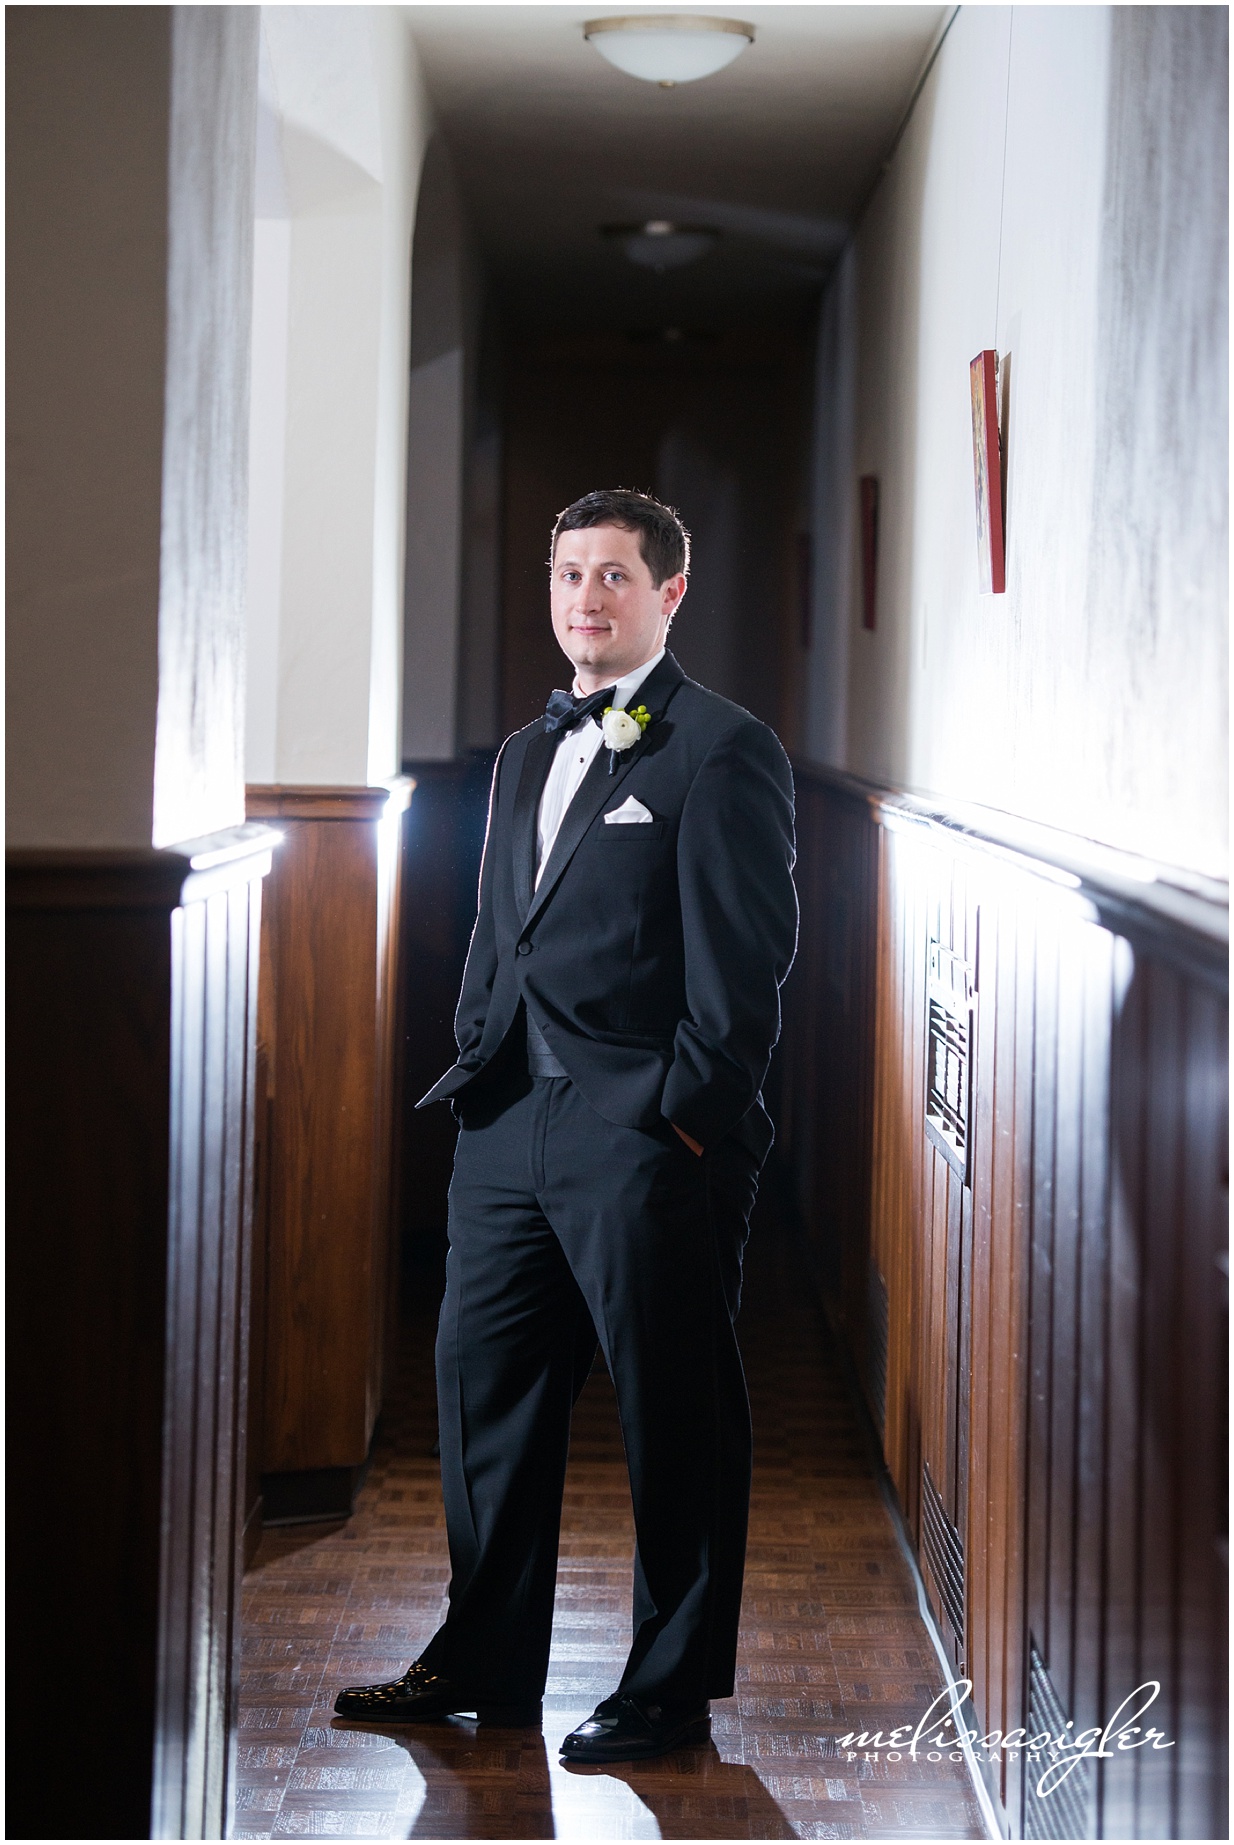 Groom portrait by Fine Art wedding photographer Melissa Sigler in Kansas City